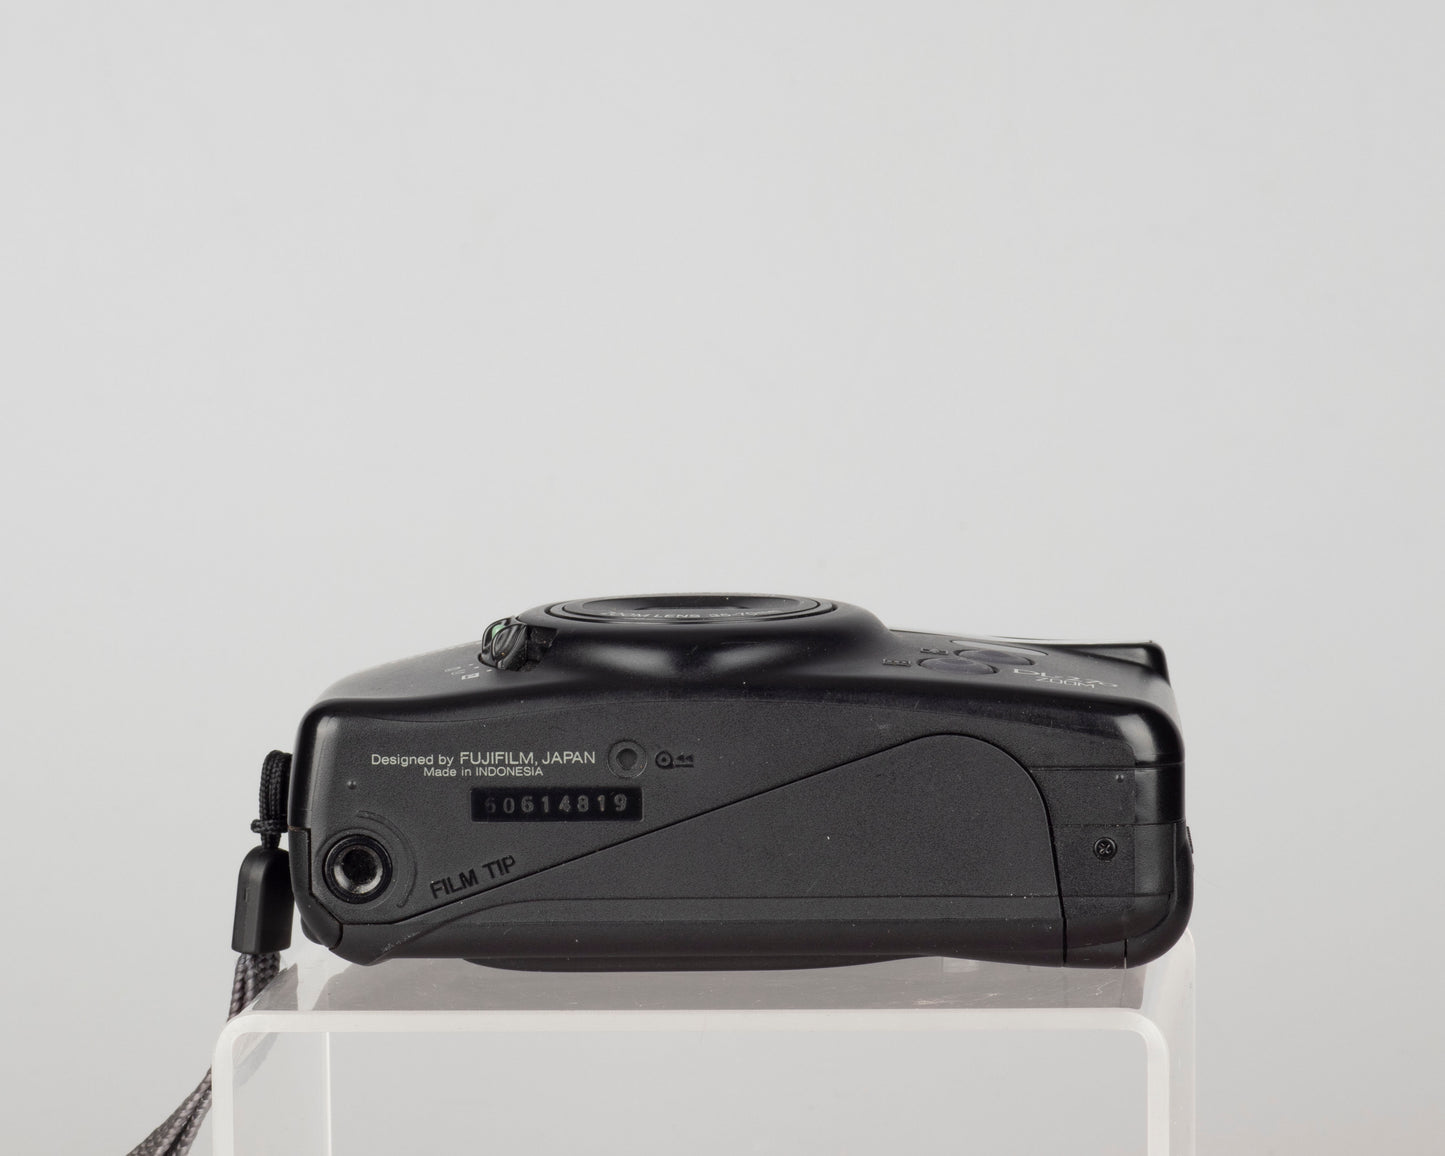 Fujifilm DL-270 Zoom Date 35mm camera (serial 60614819)